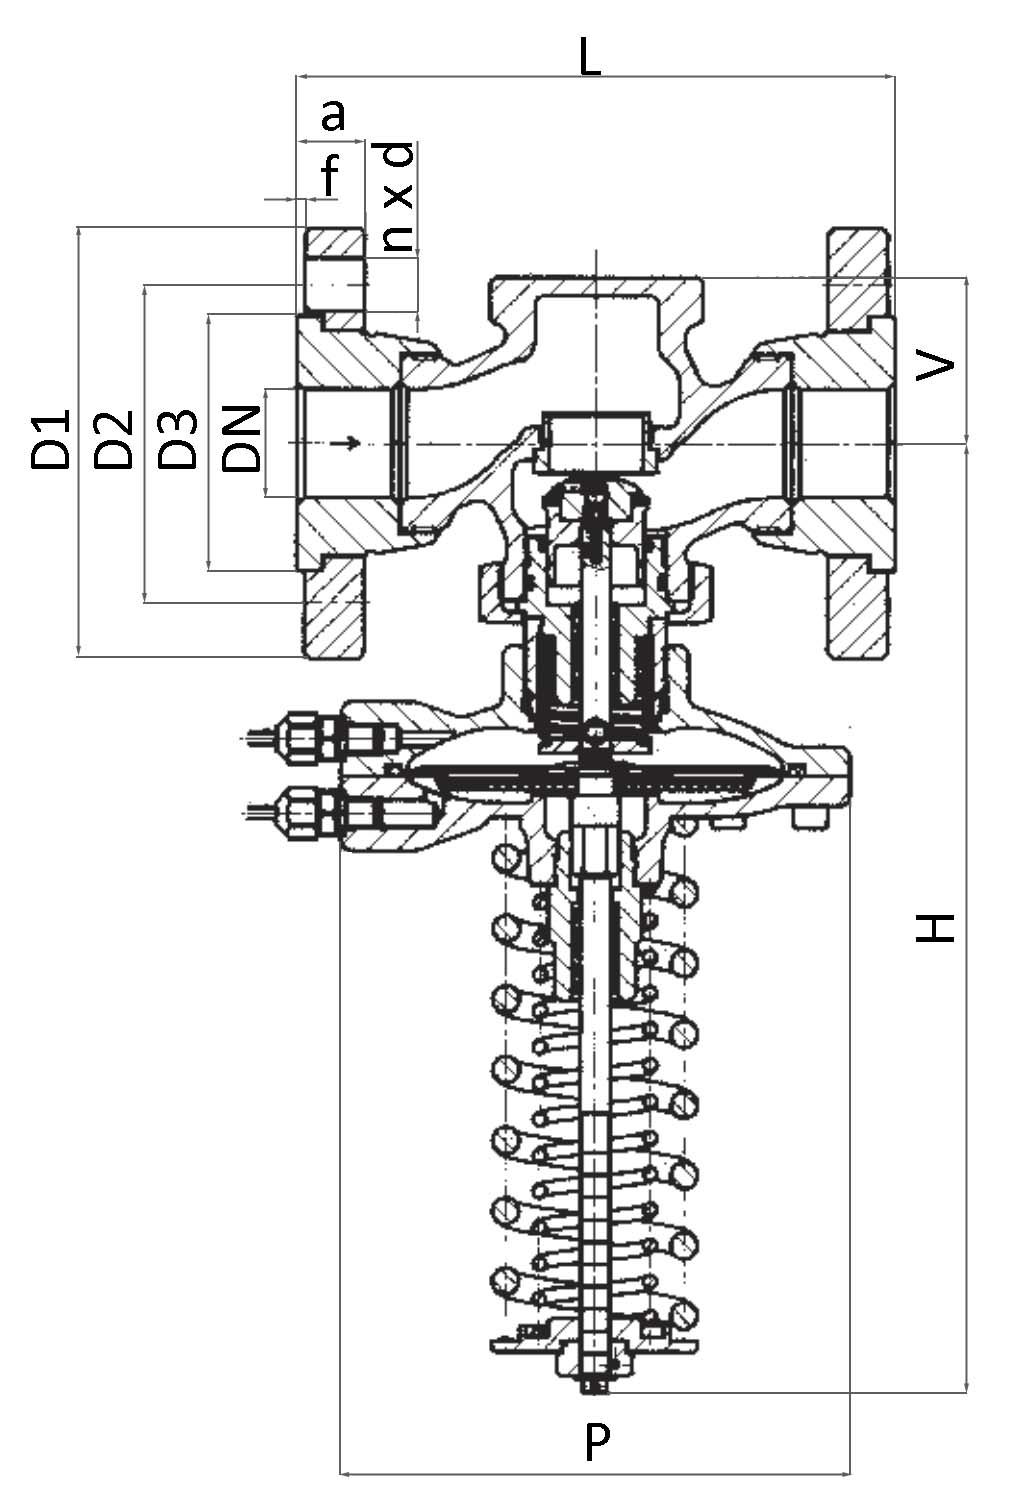 Регулятор перепада давления LDM RD122D Ду15 Ру25 Kvs0.63 прямого действия, корпус - чугун, фланцевый, Tmax до 150°С, диапазон настройки 24 (60-400 кПа)